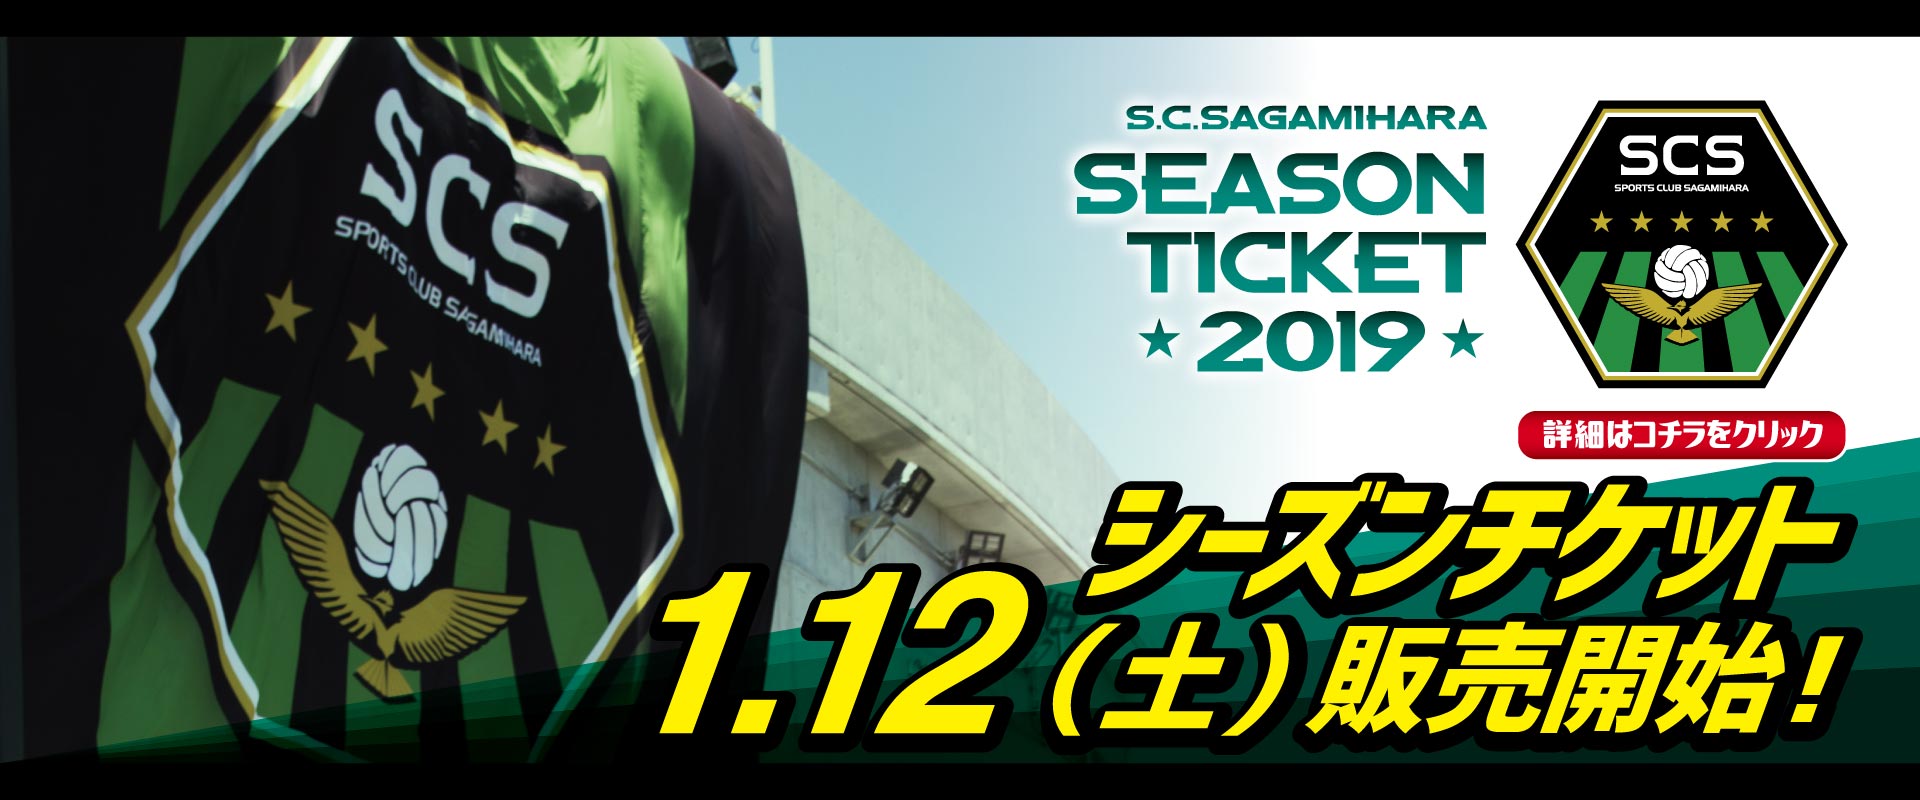 season_ticket_2019.jpg